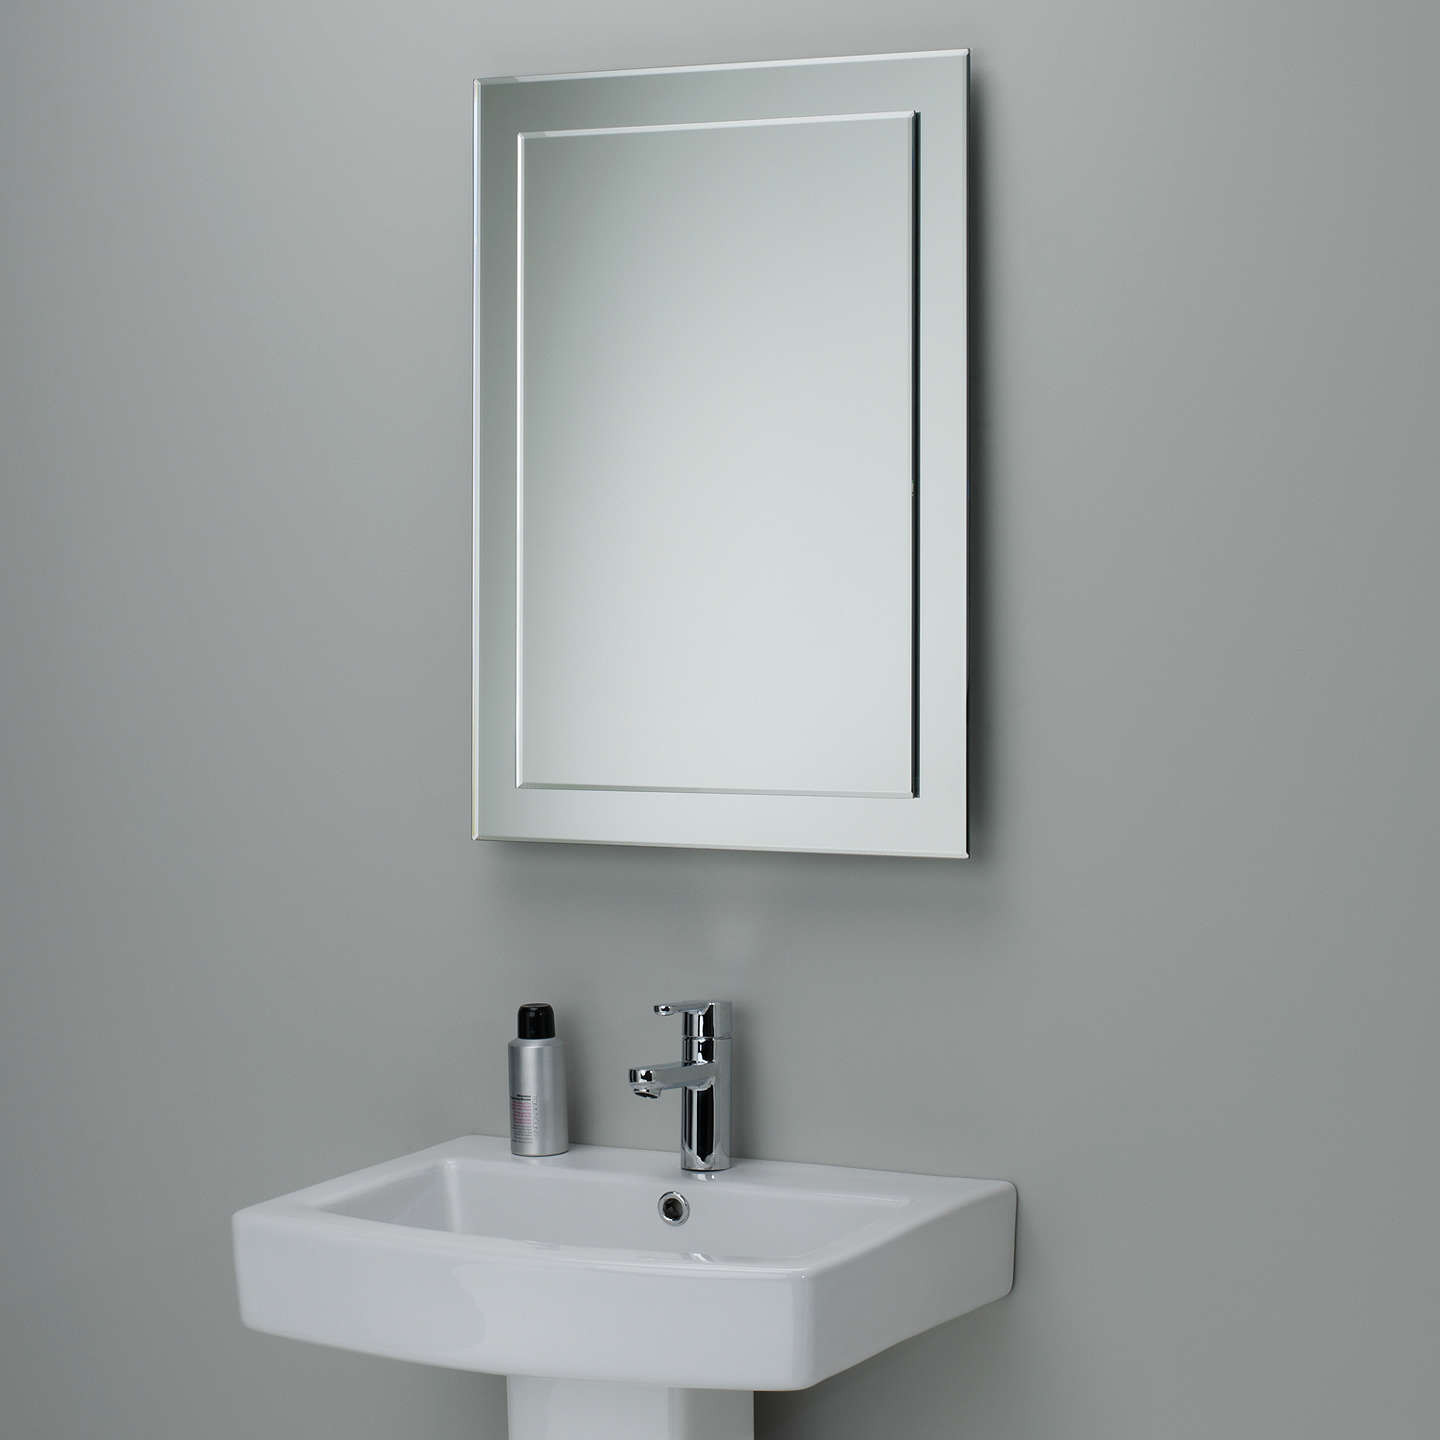 Bathroom Mirrors Online
 John Lewis Duo Wall Bathroom Mirror 70 x 50cm at John Lewis